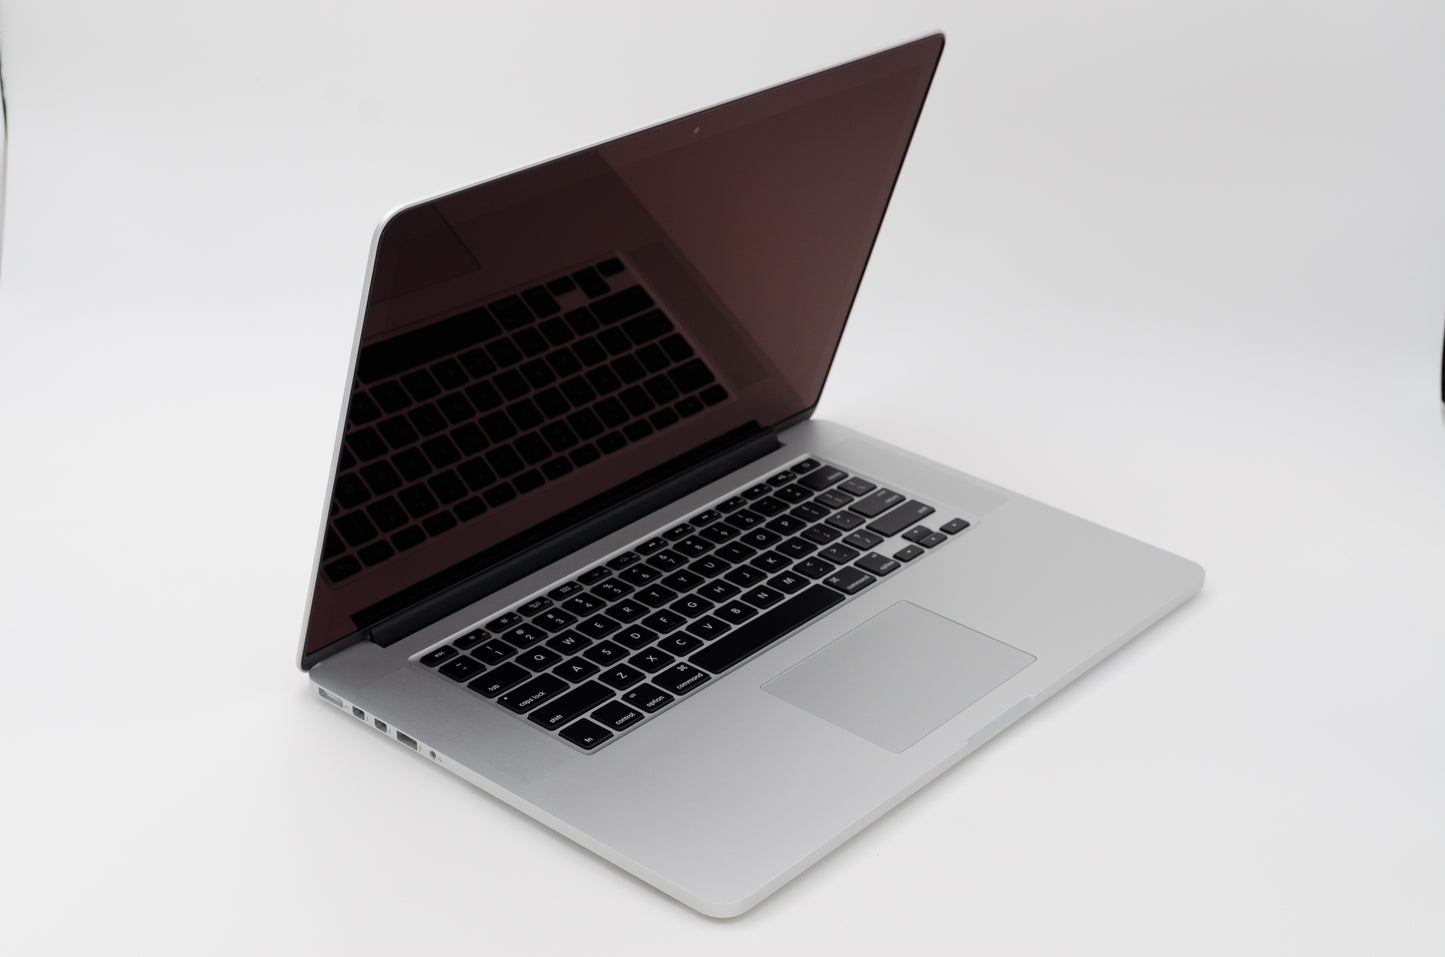 apple-early-2011-15.4-inch-macbook-pro-a1286-aluminum-qci7 - 2ghz processor, 4gb ram, hd 6490m - 256mb gpu-mc721ll/a-4